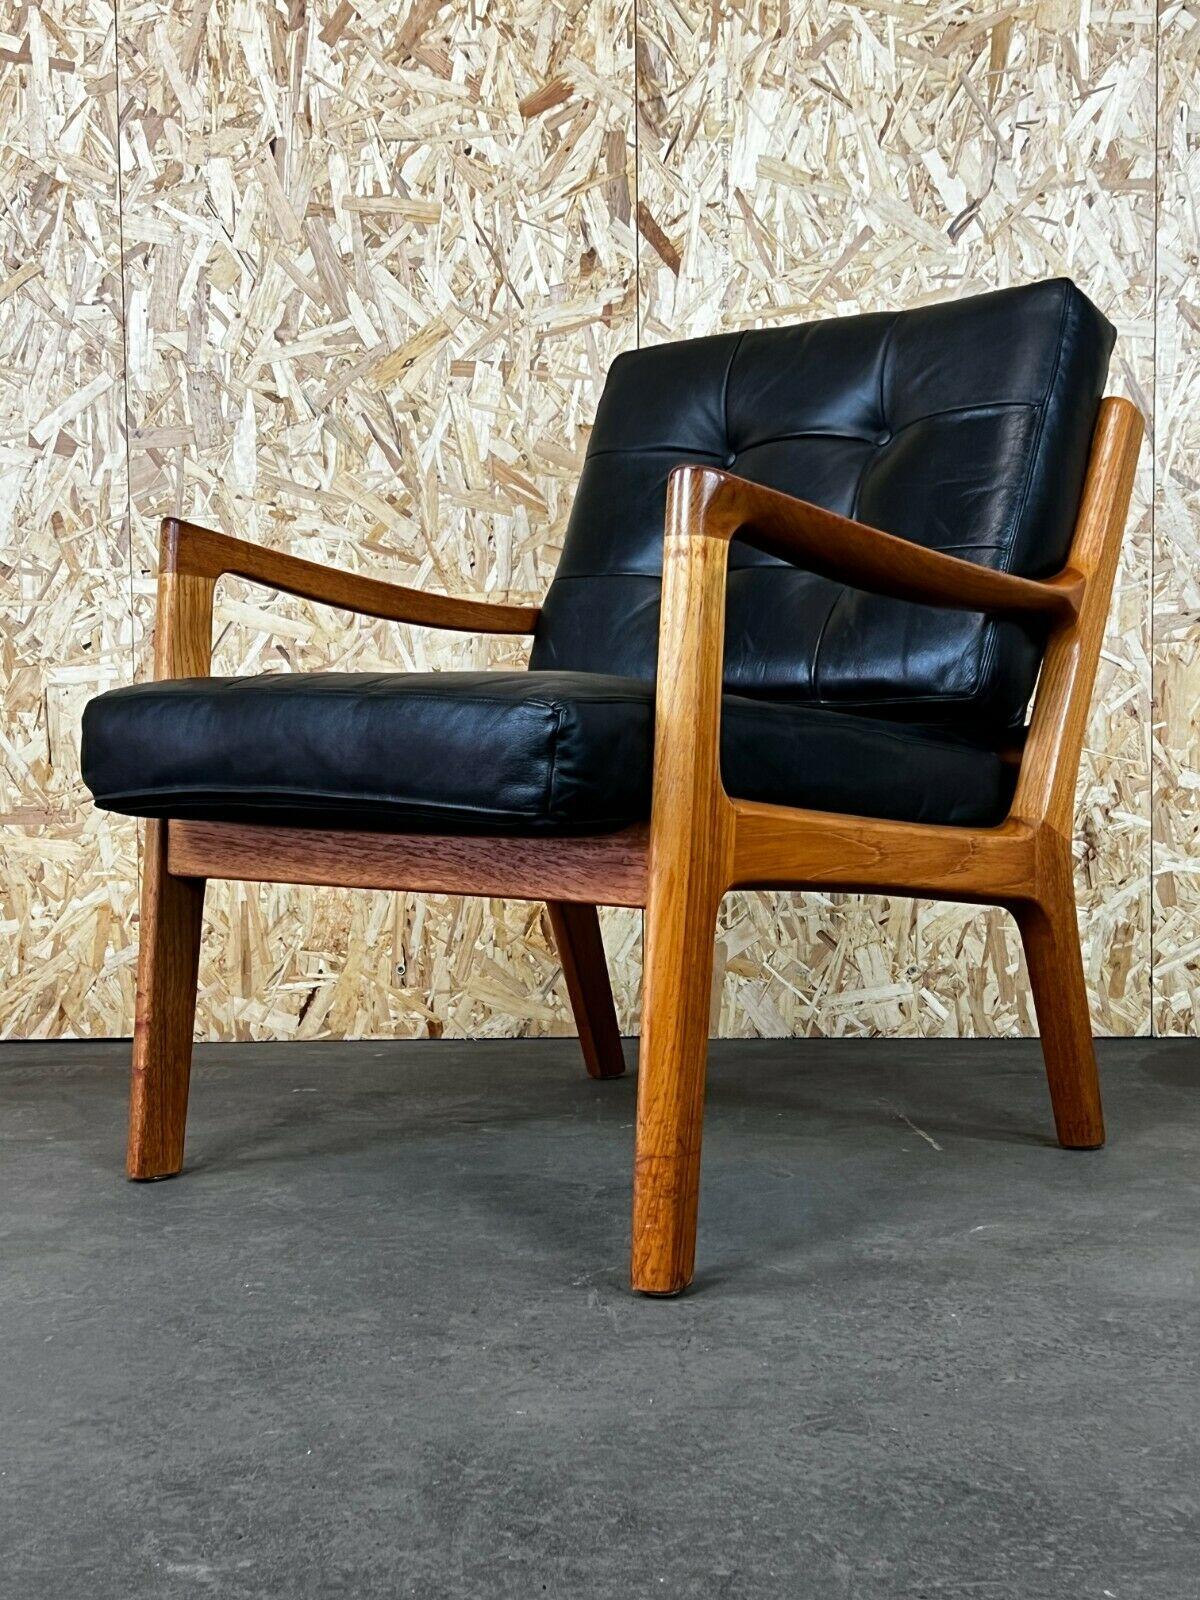 60s 70s teak easy chair armchair Ole Wanscher Poul Jeppesens Møbelfabrik

Object: Easy Chair

Manufacturer: Poul Jeppesens Furniture Factory

Condition: good - vintage

Age: around 1960-1970

Dimensions:

68.5cm x 83cm x 80cm
Seat